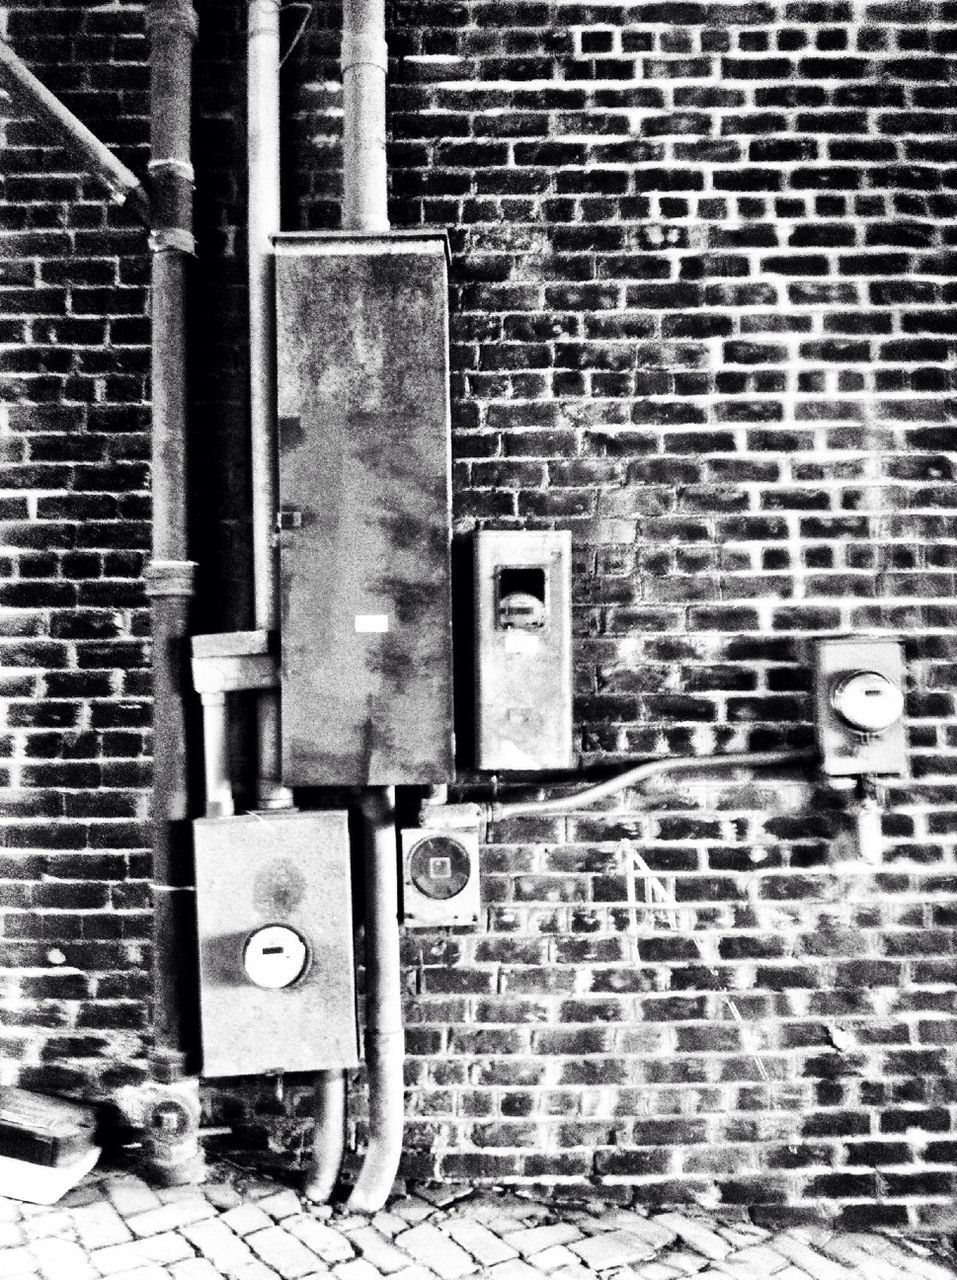 Old fuse box on brick wall